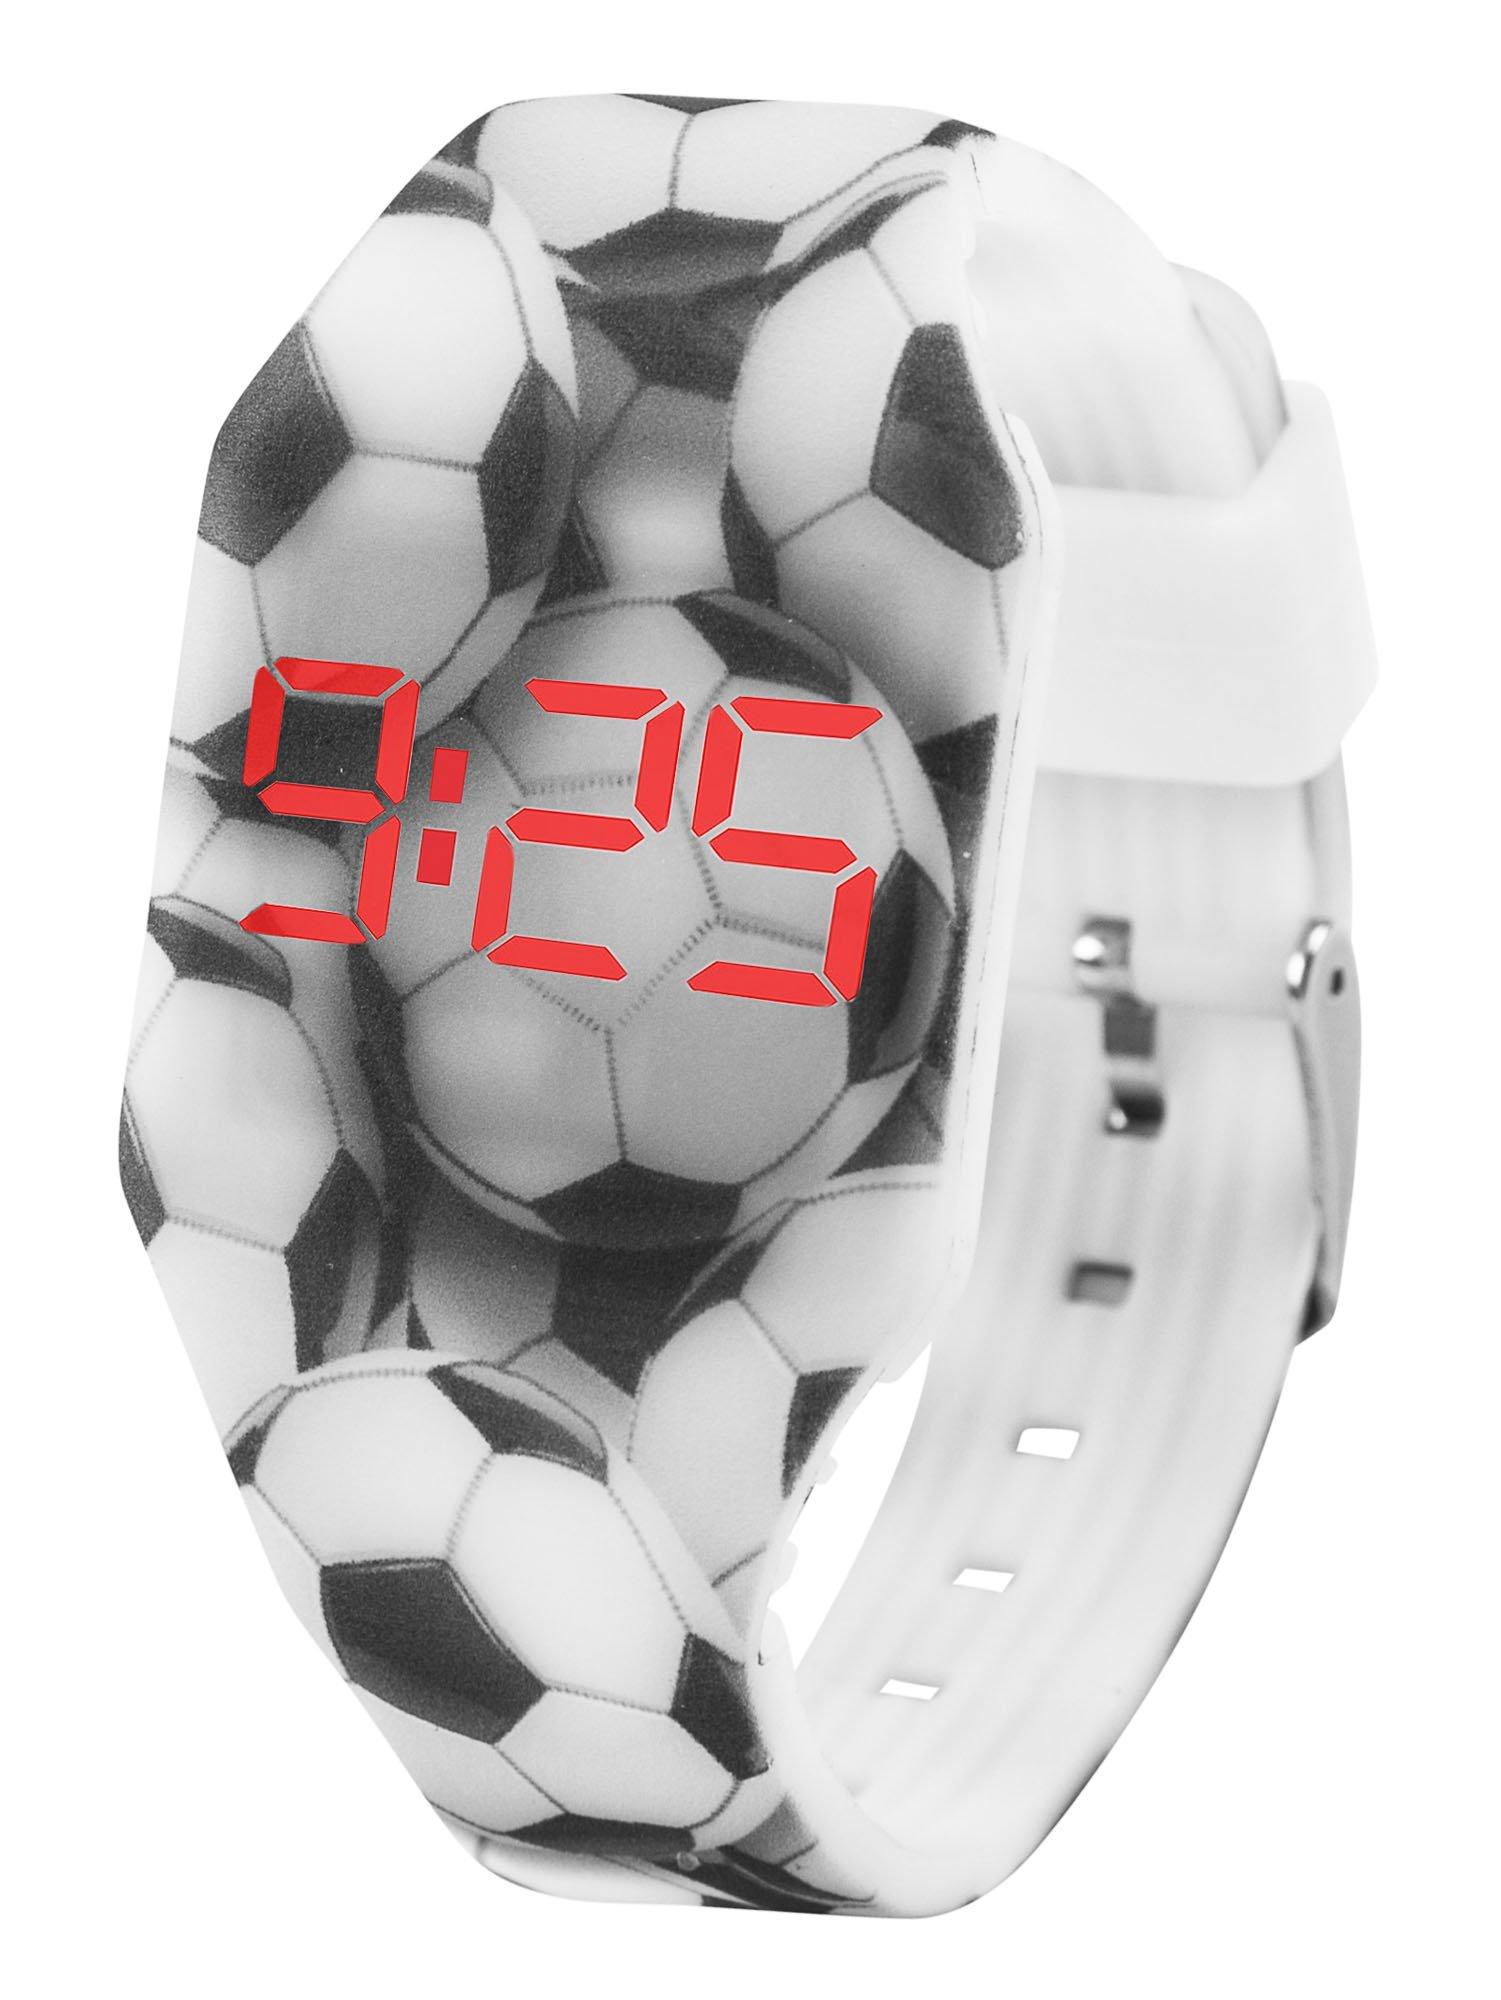 Kiddus  Digital LED Watch Football 